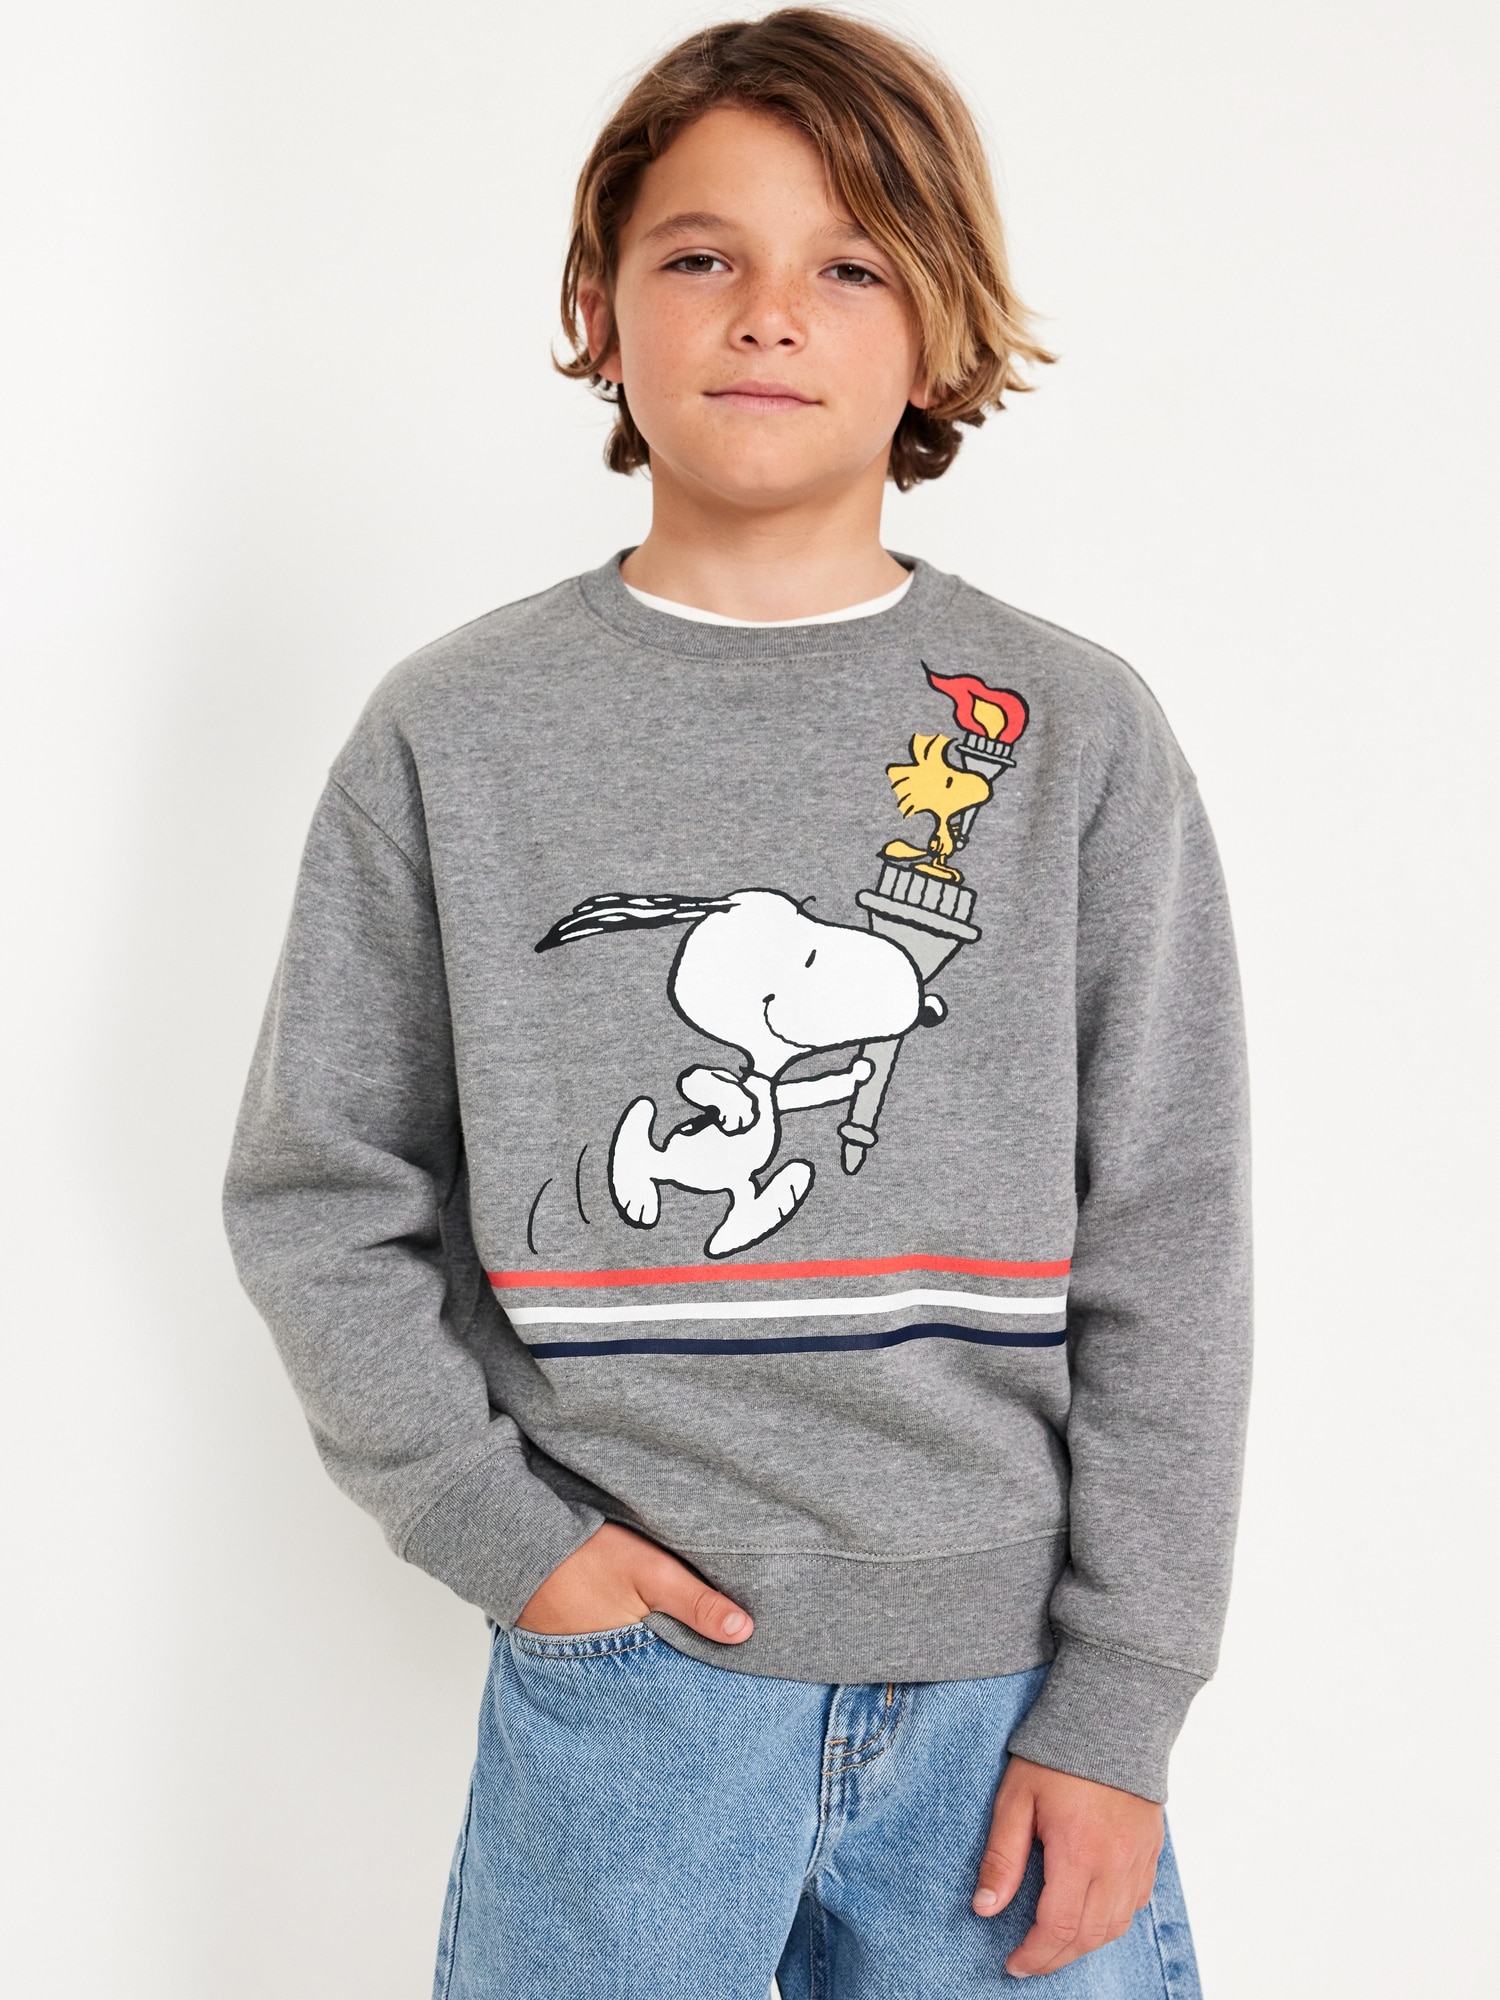 Peanuts Gender-Neutral Crew-Neck Sweatshirt for Kids